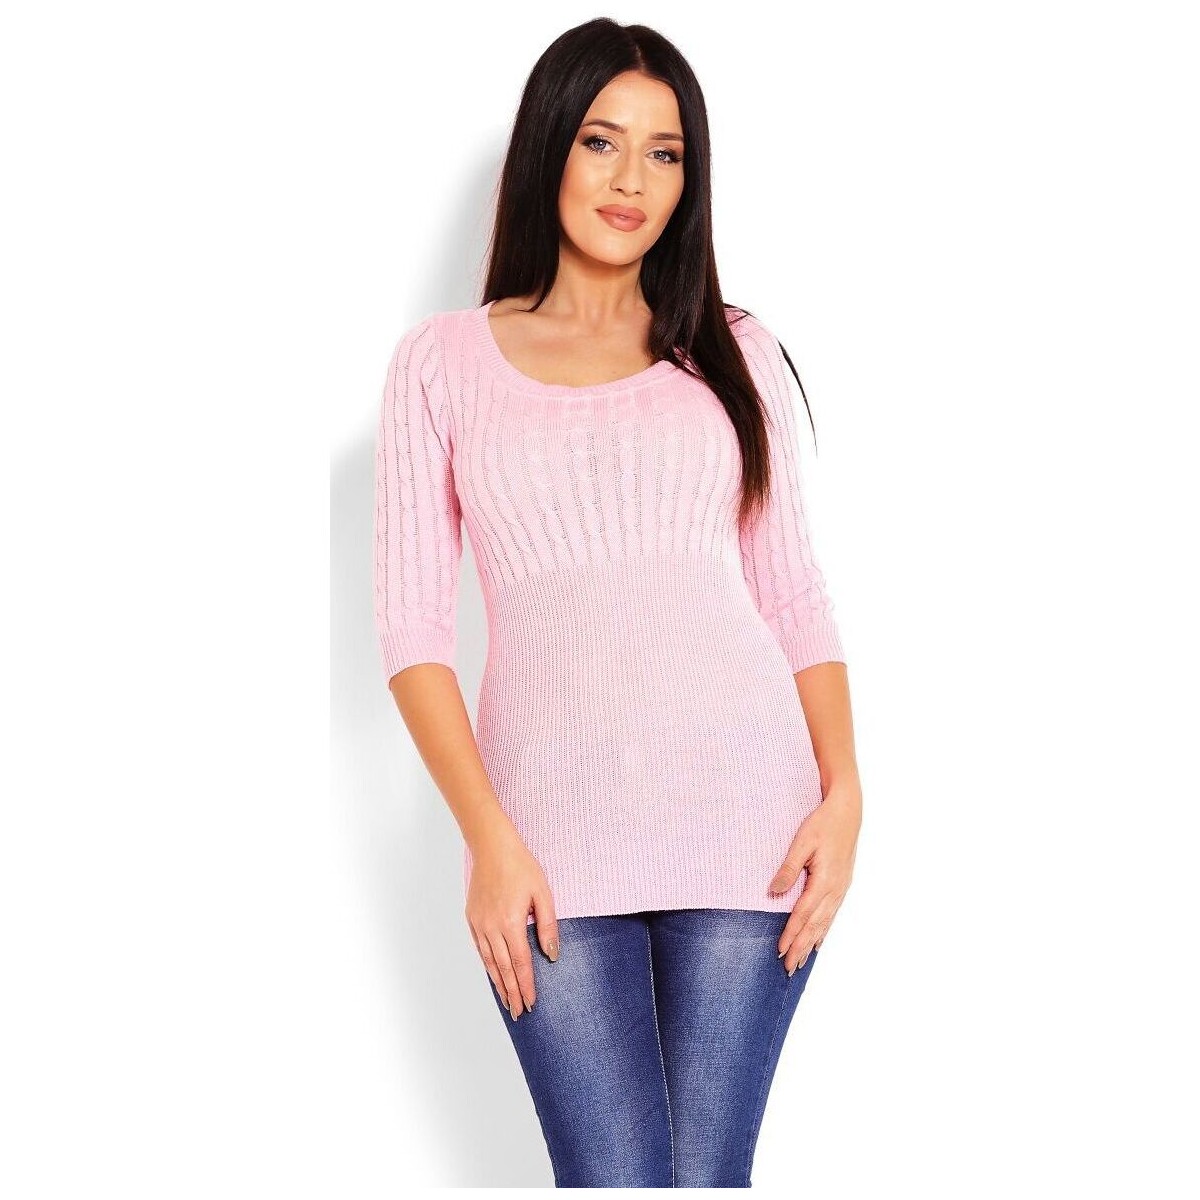 Textil Ženy Svetry Peekaboo Dámský přiléhavý svetr s 3/4 rukávem Ullo růžová Růžová